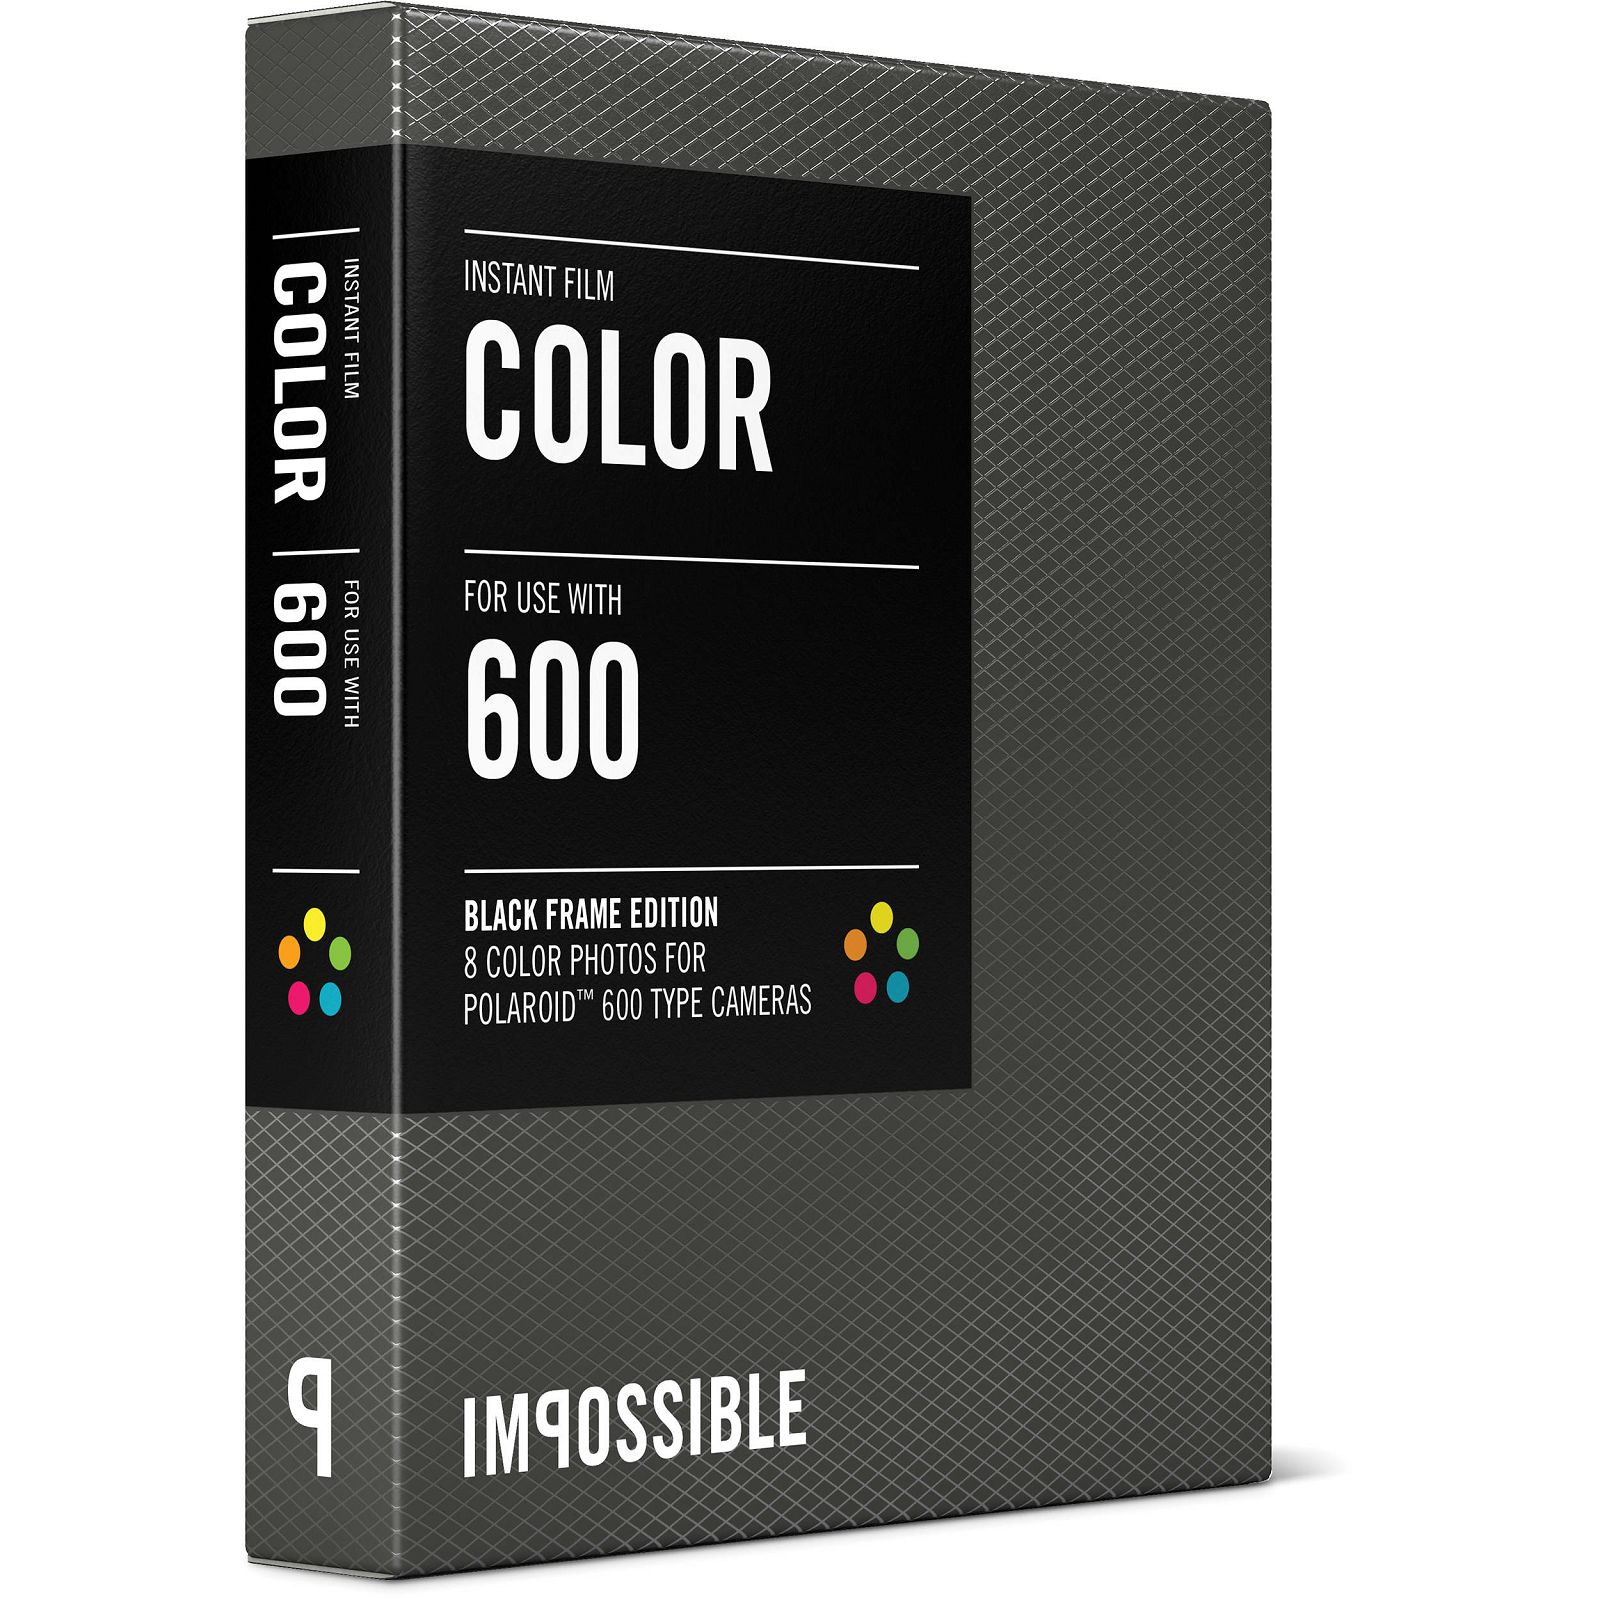 Impossible Color Instant Film for Polaroid 600 Cameras (Black Frame, 8 Exposures) 600 Color Black Frame (3553)